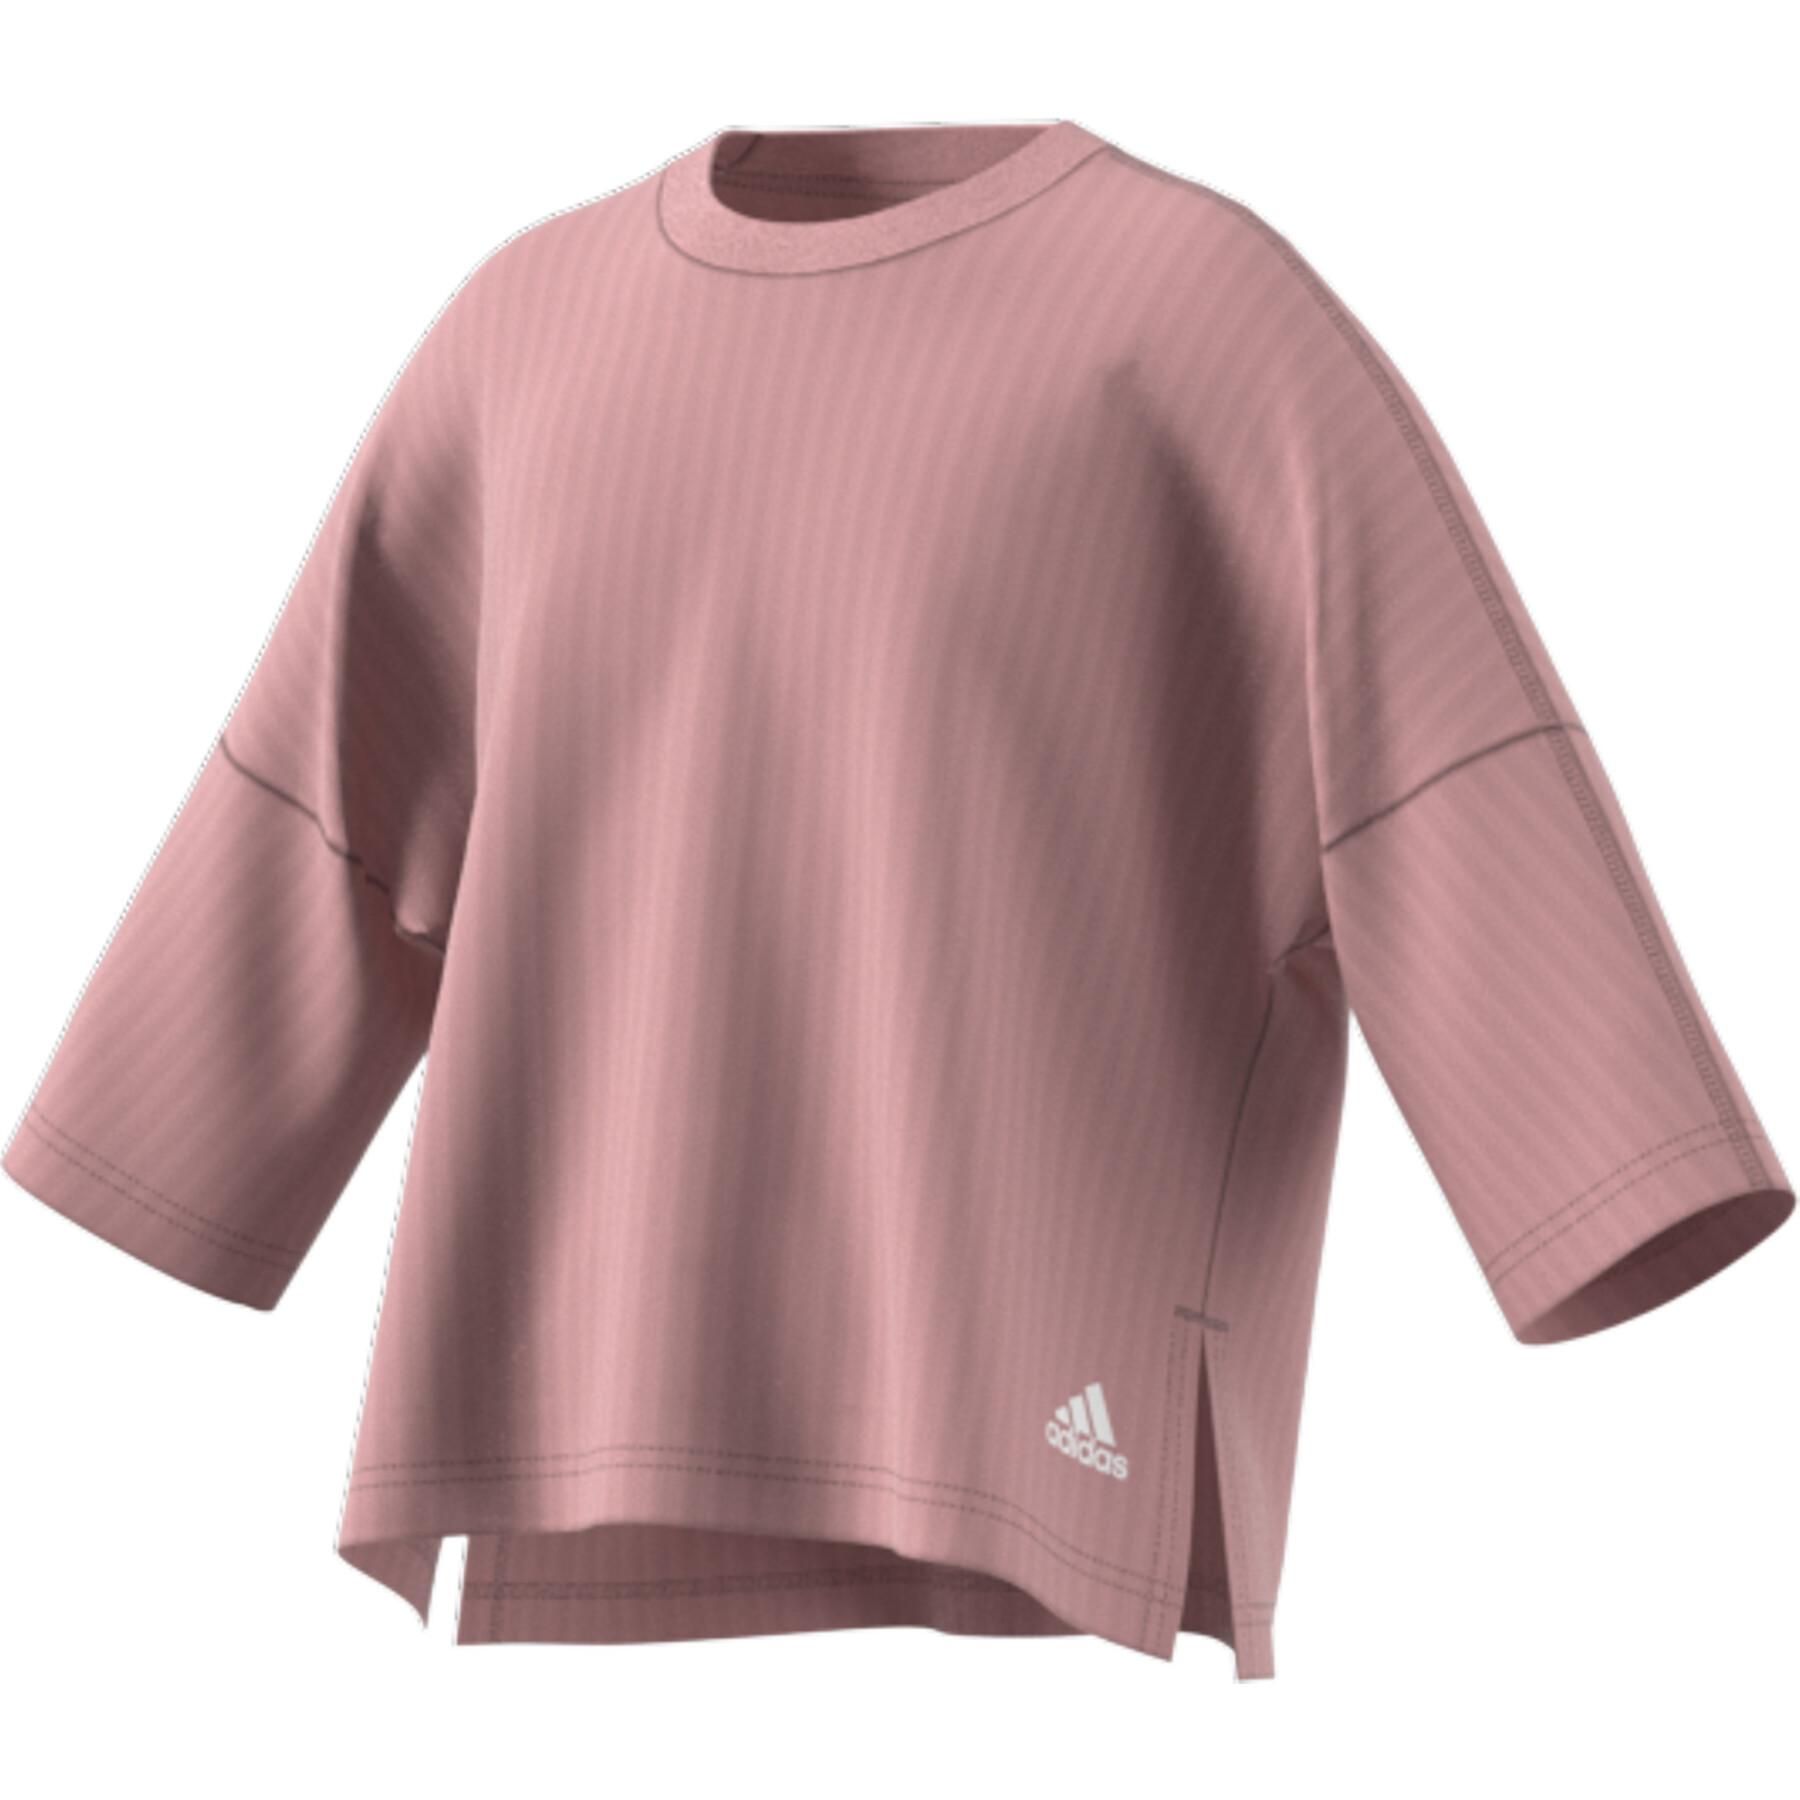 Sweatshirt Mädchen adidas Yoga Lounge Cotton Comfort